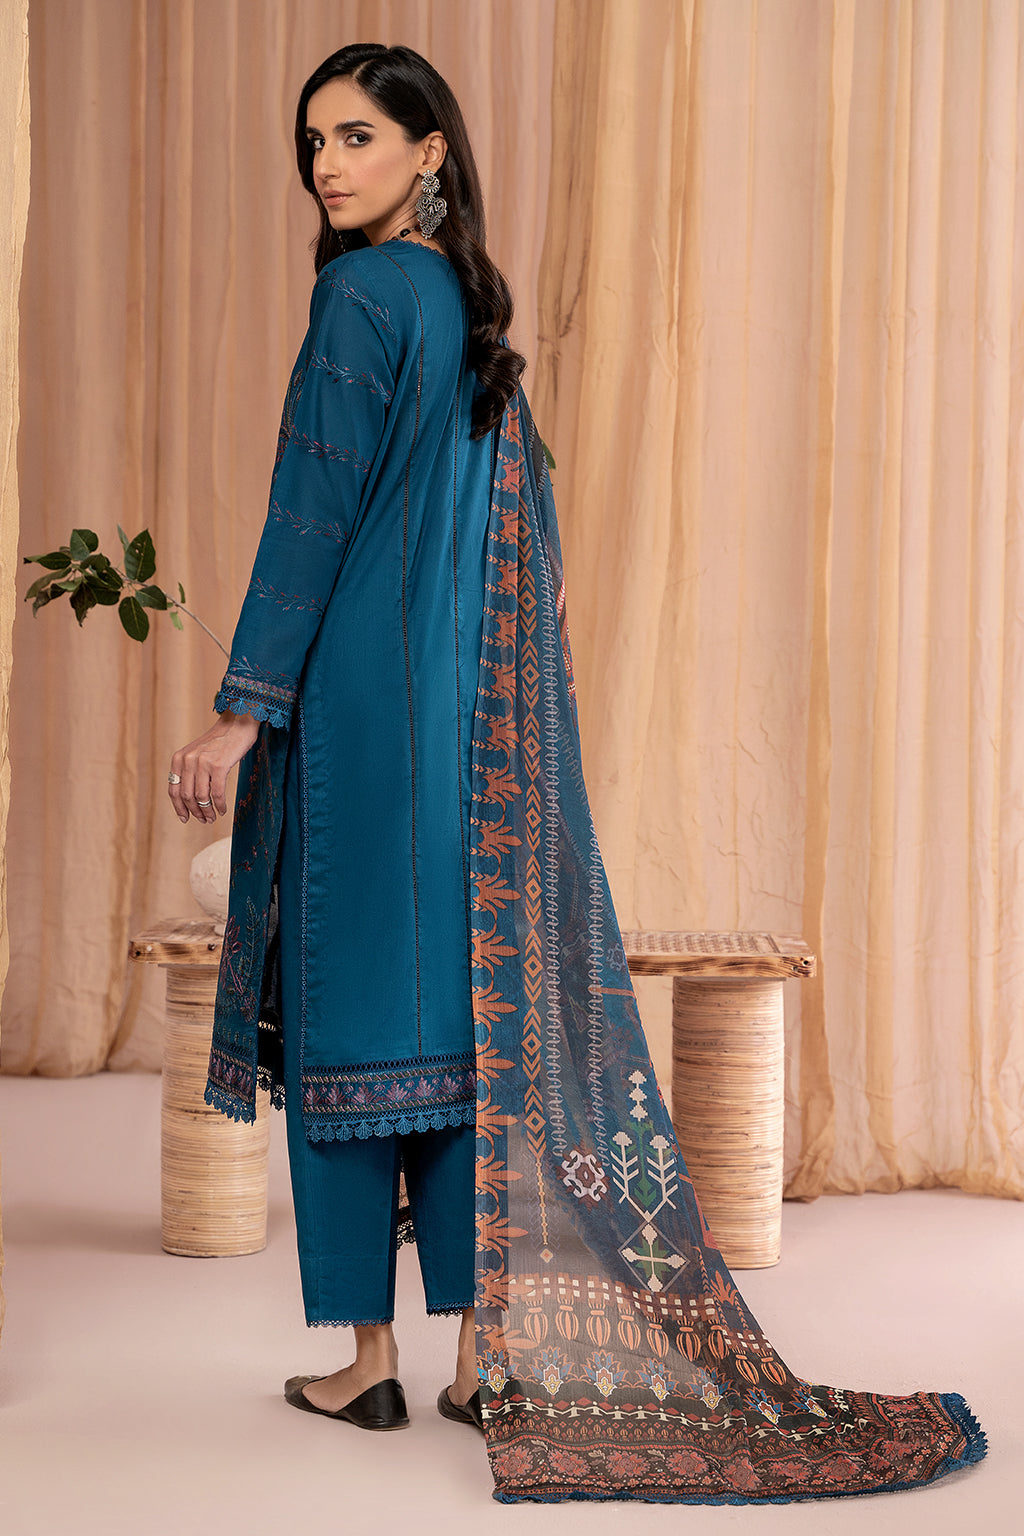 Shop Now, ZEA#4 - Eid ul Adha Lawn 2023 - Zarif -Shahana Collection UK - Wedding and Bridal Party Wear - Eid Edit 2023